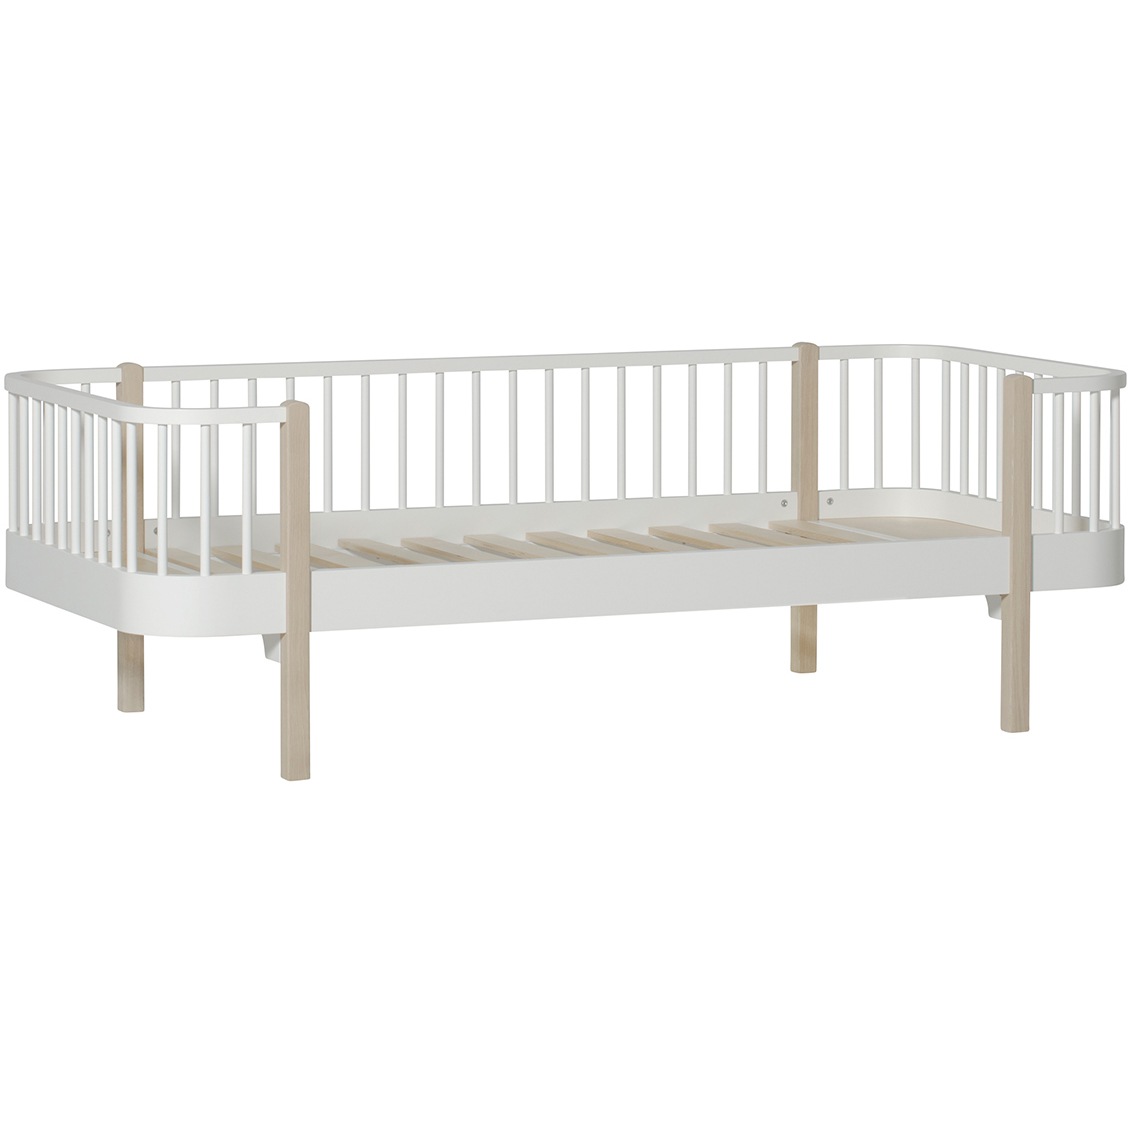 Wood Day Bed, 90x200cm, White/Oak